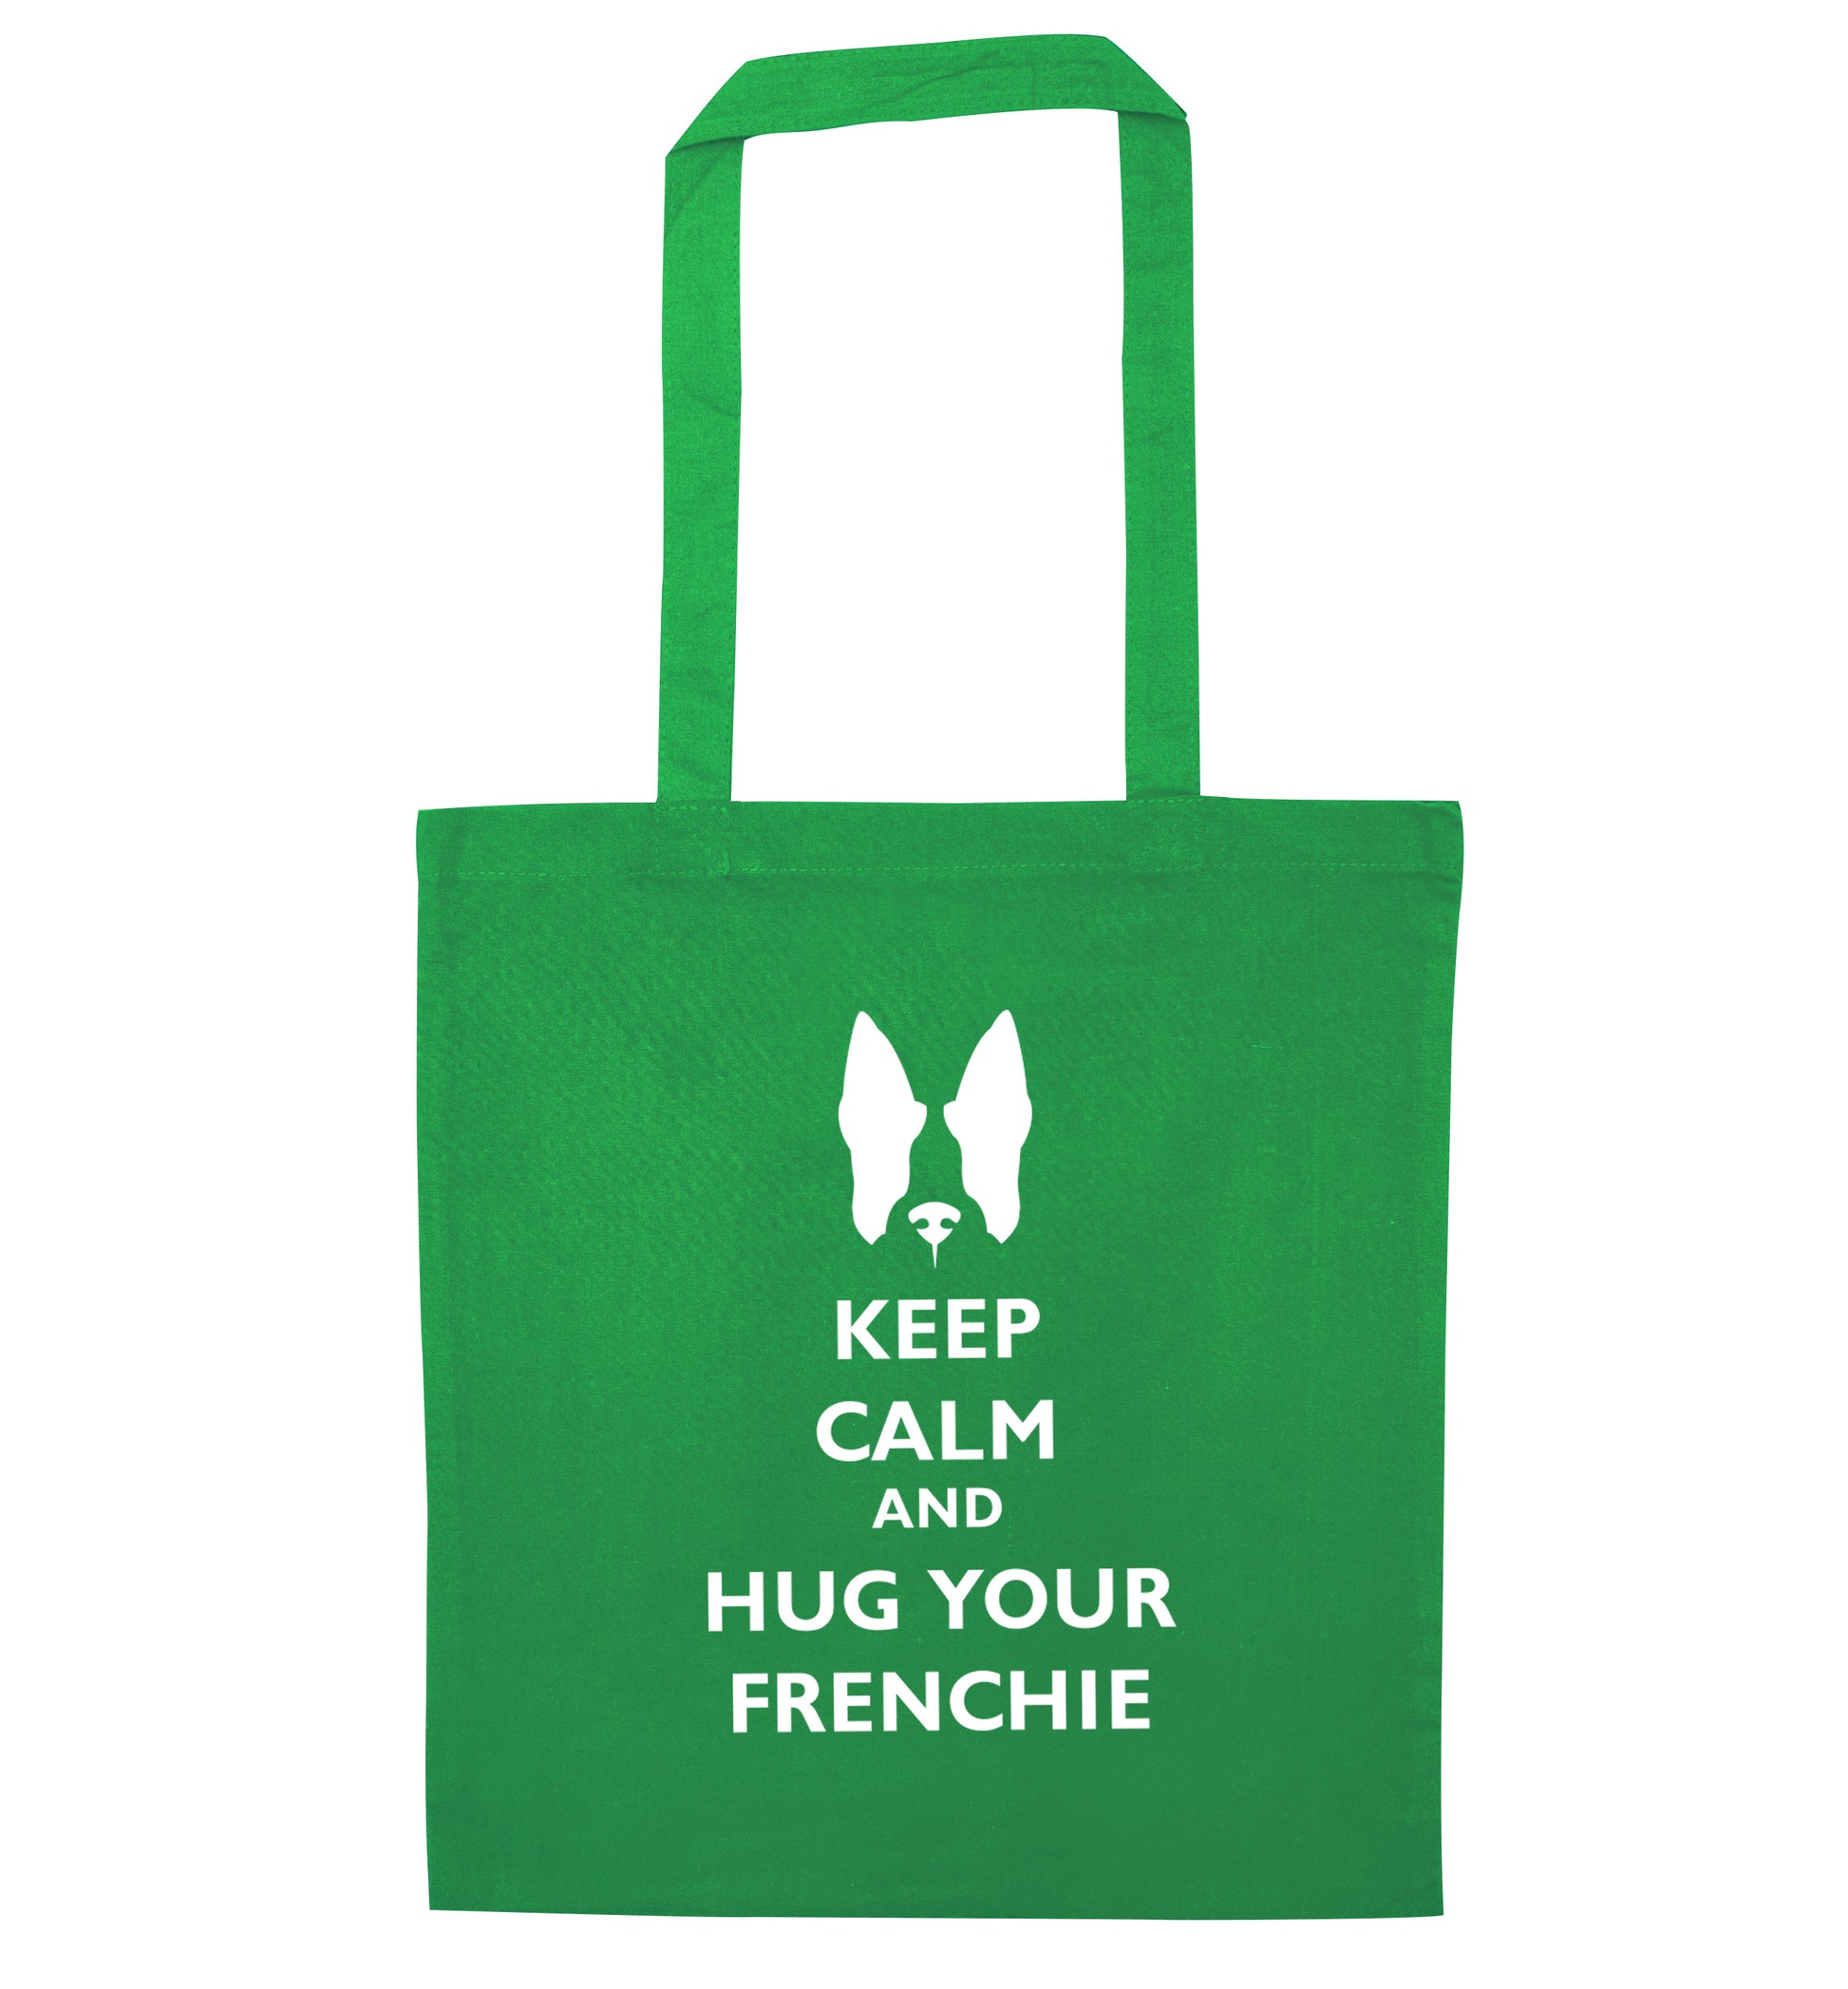 Keep calm and hug your frenchie green tote bag